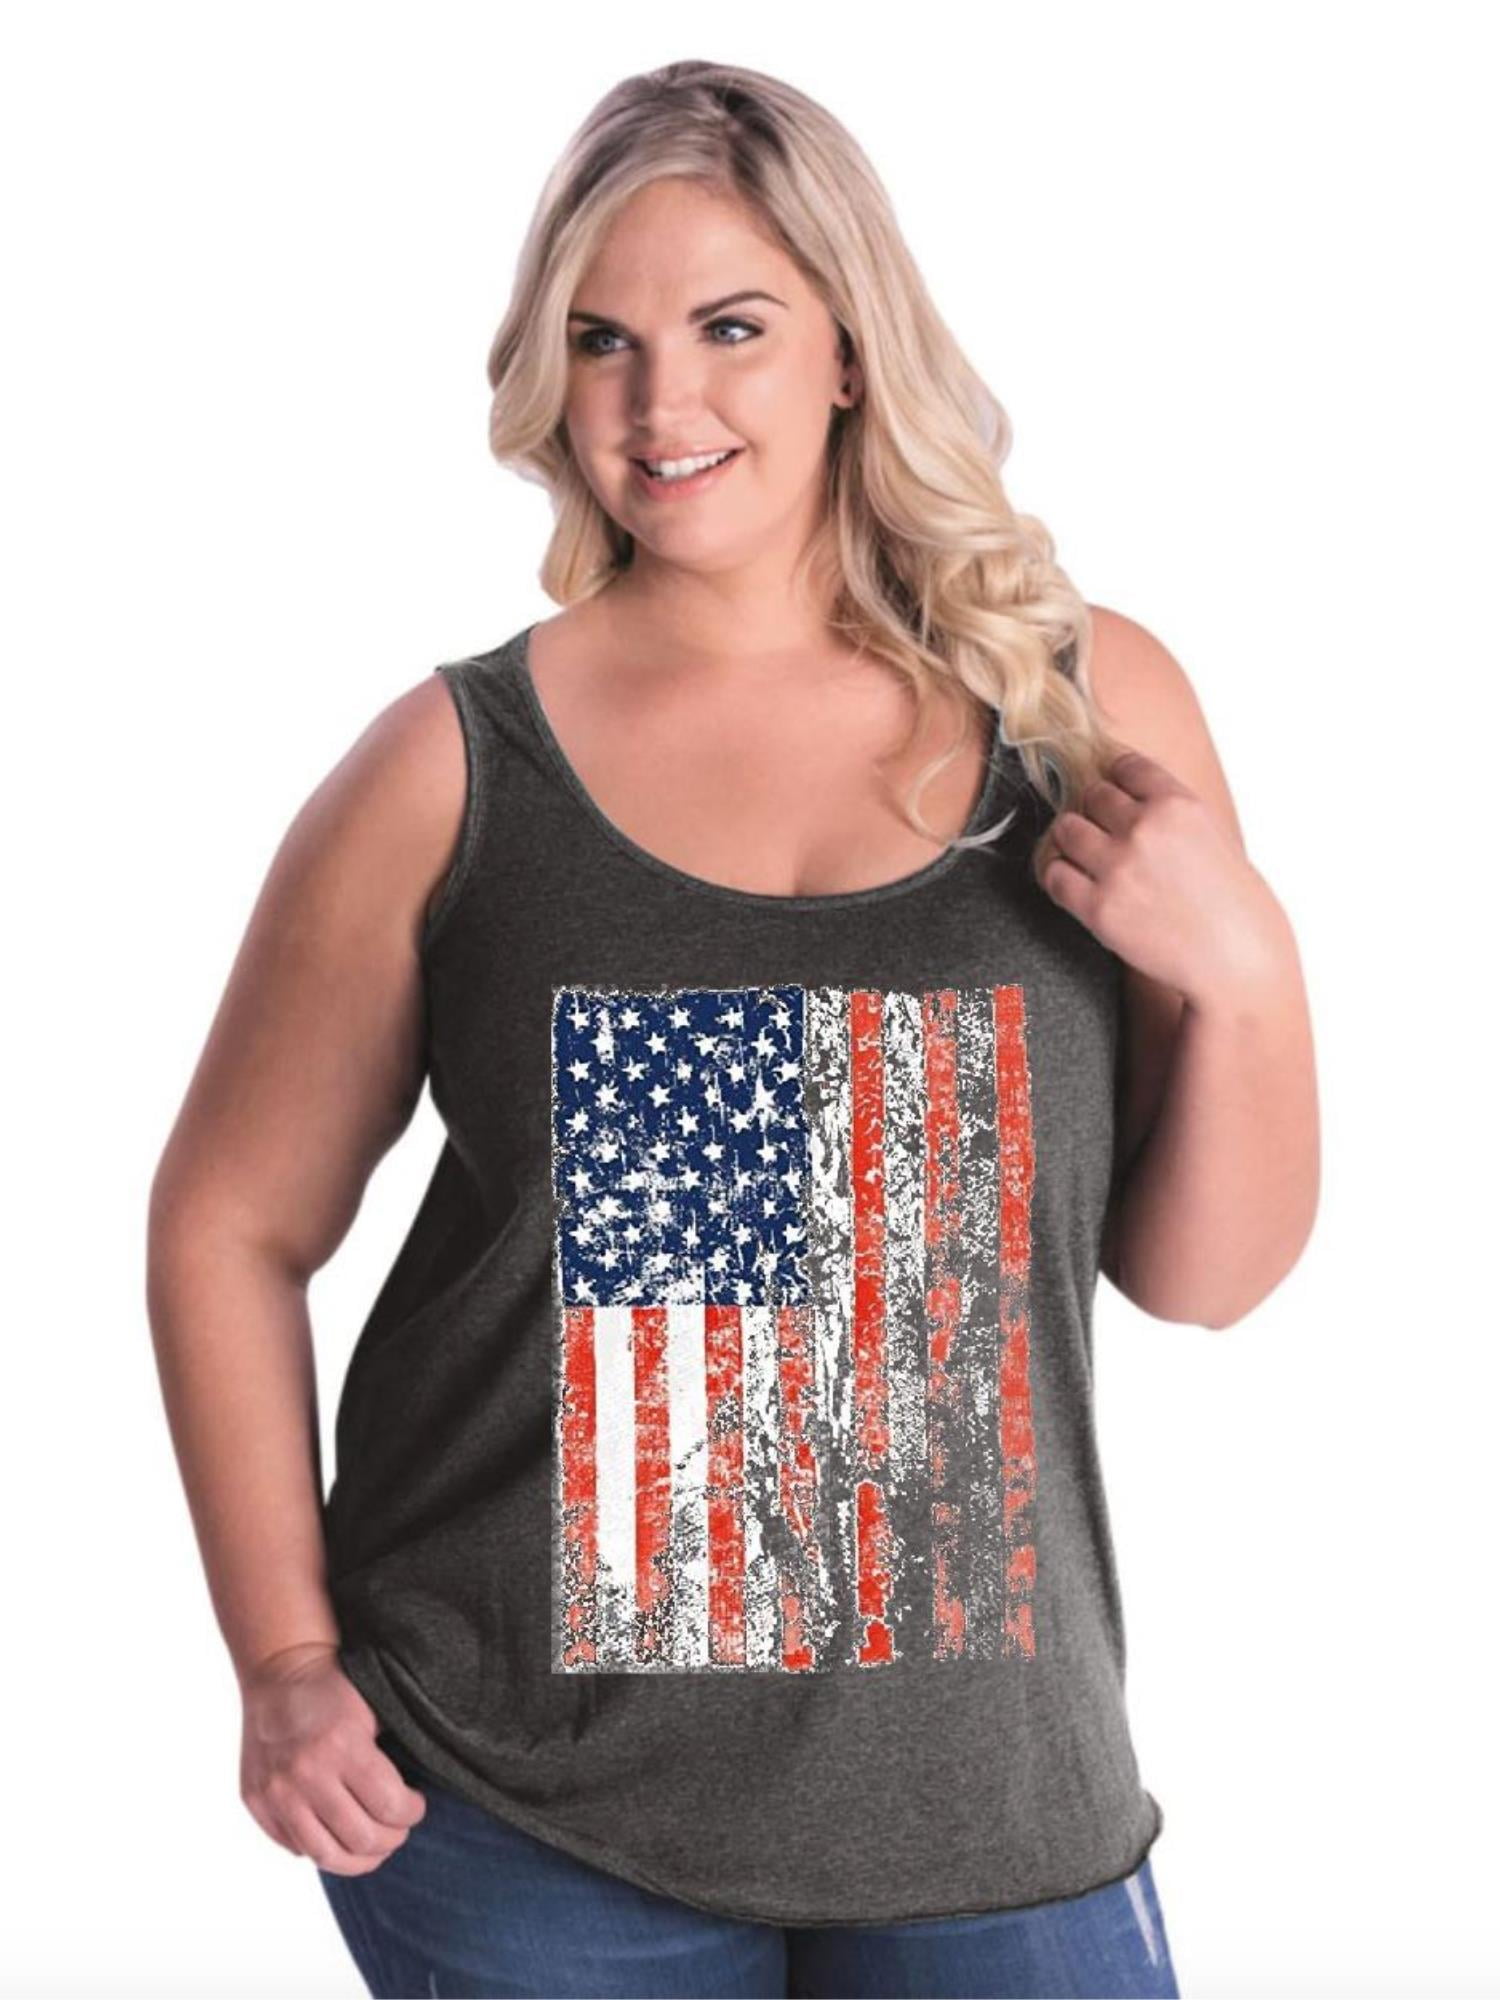 SHOPESSA Women Summer Casual Tanks Heart Print Patriotic American Flag Graphic Tank Tops Sleeveless Blouses 